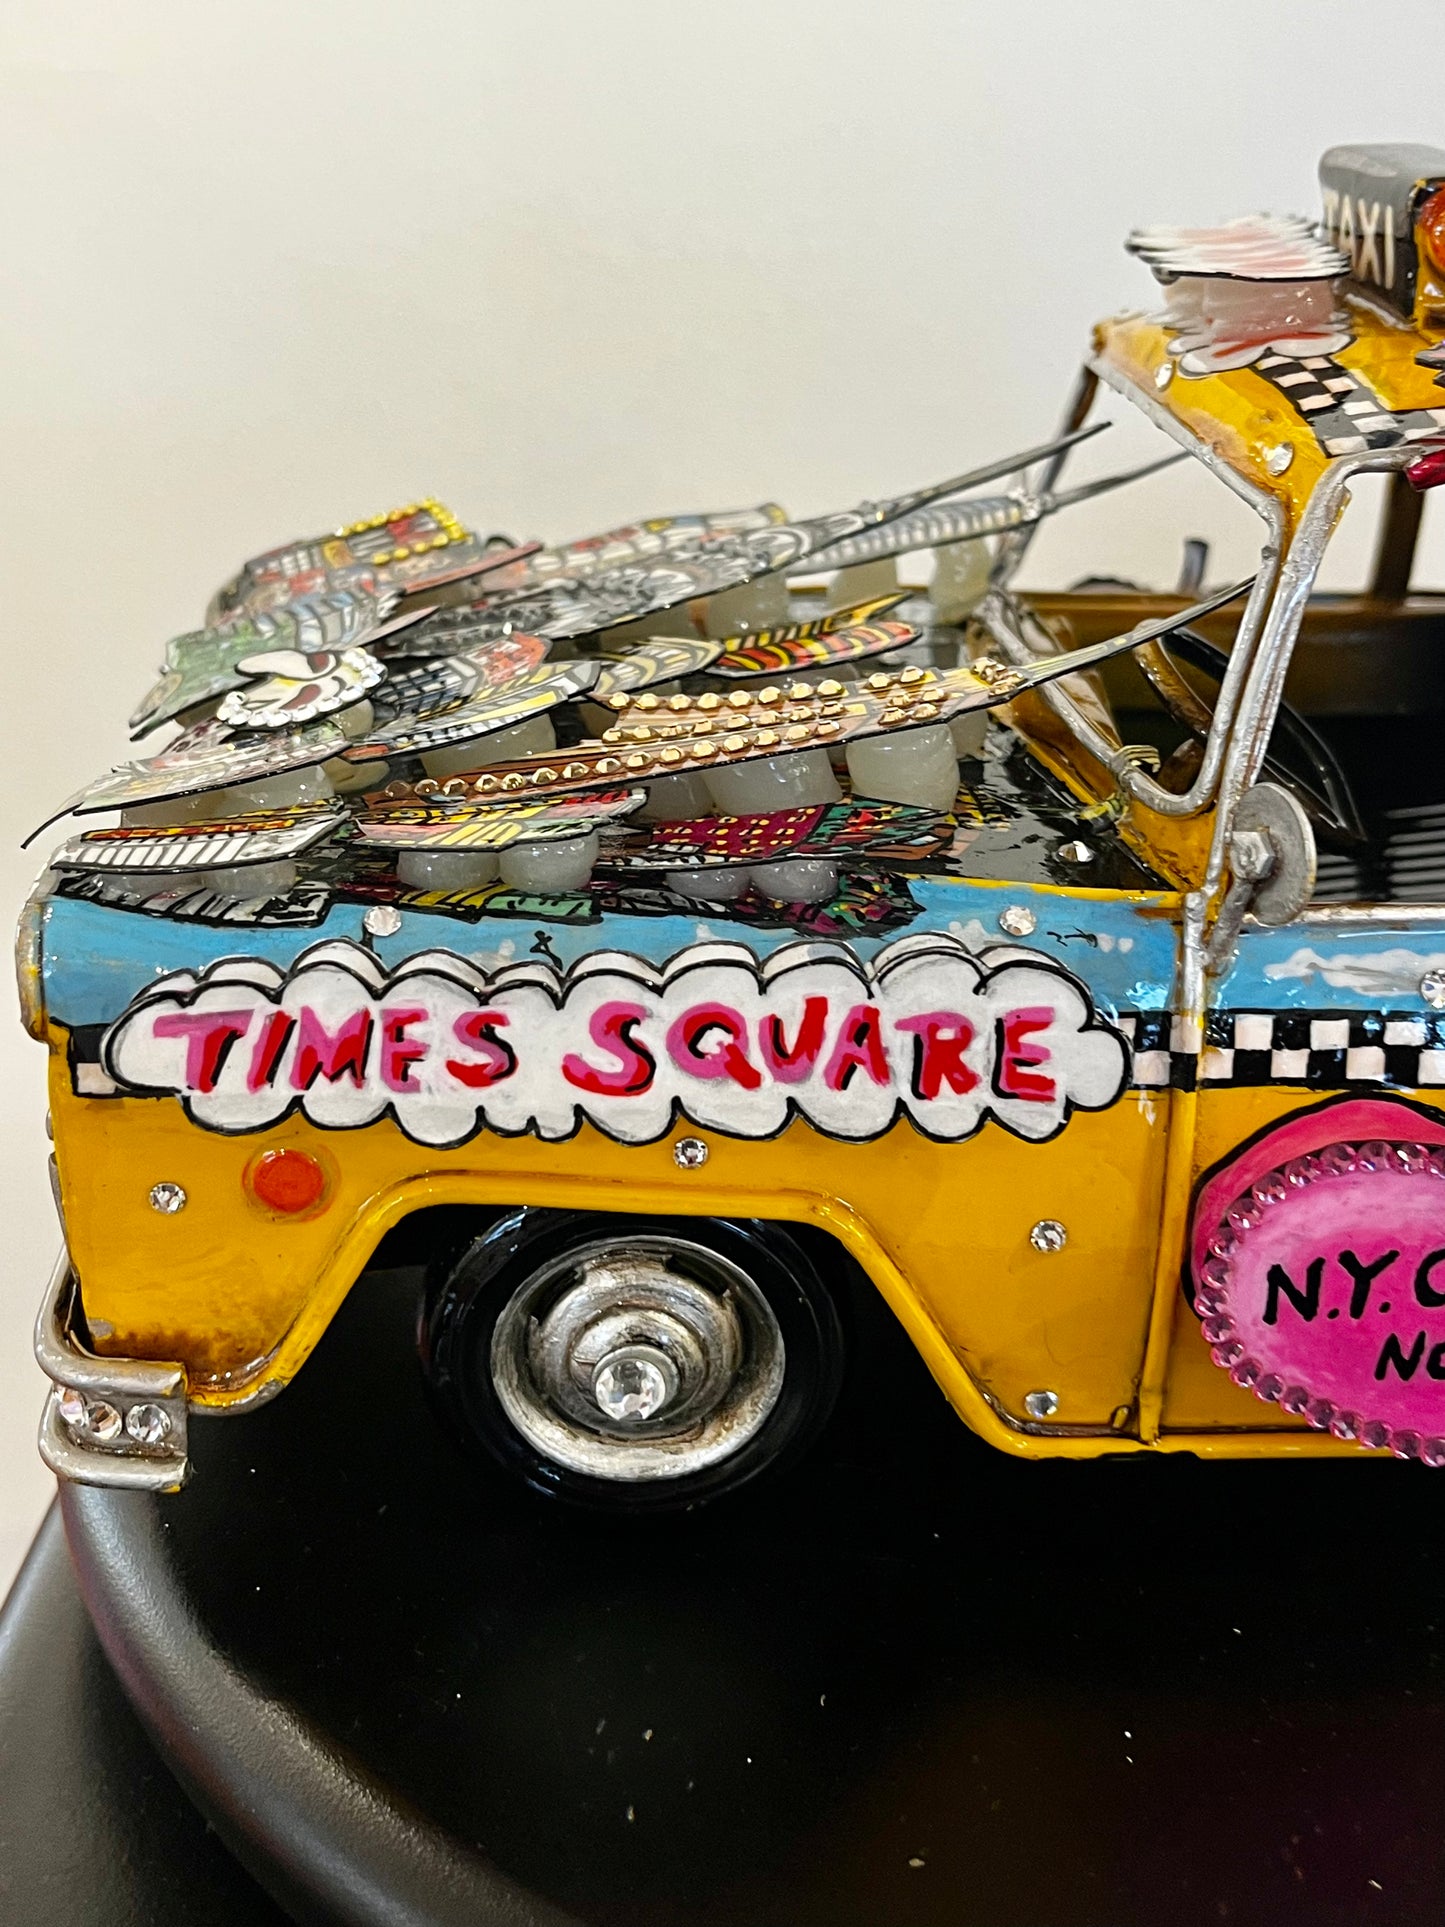 Spider-Man Taking a Taxi Ride Unique Car Sculpture